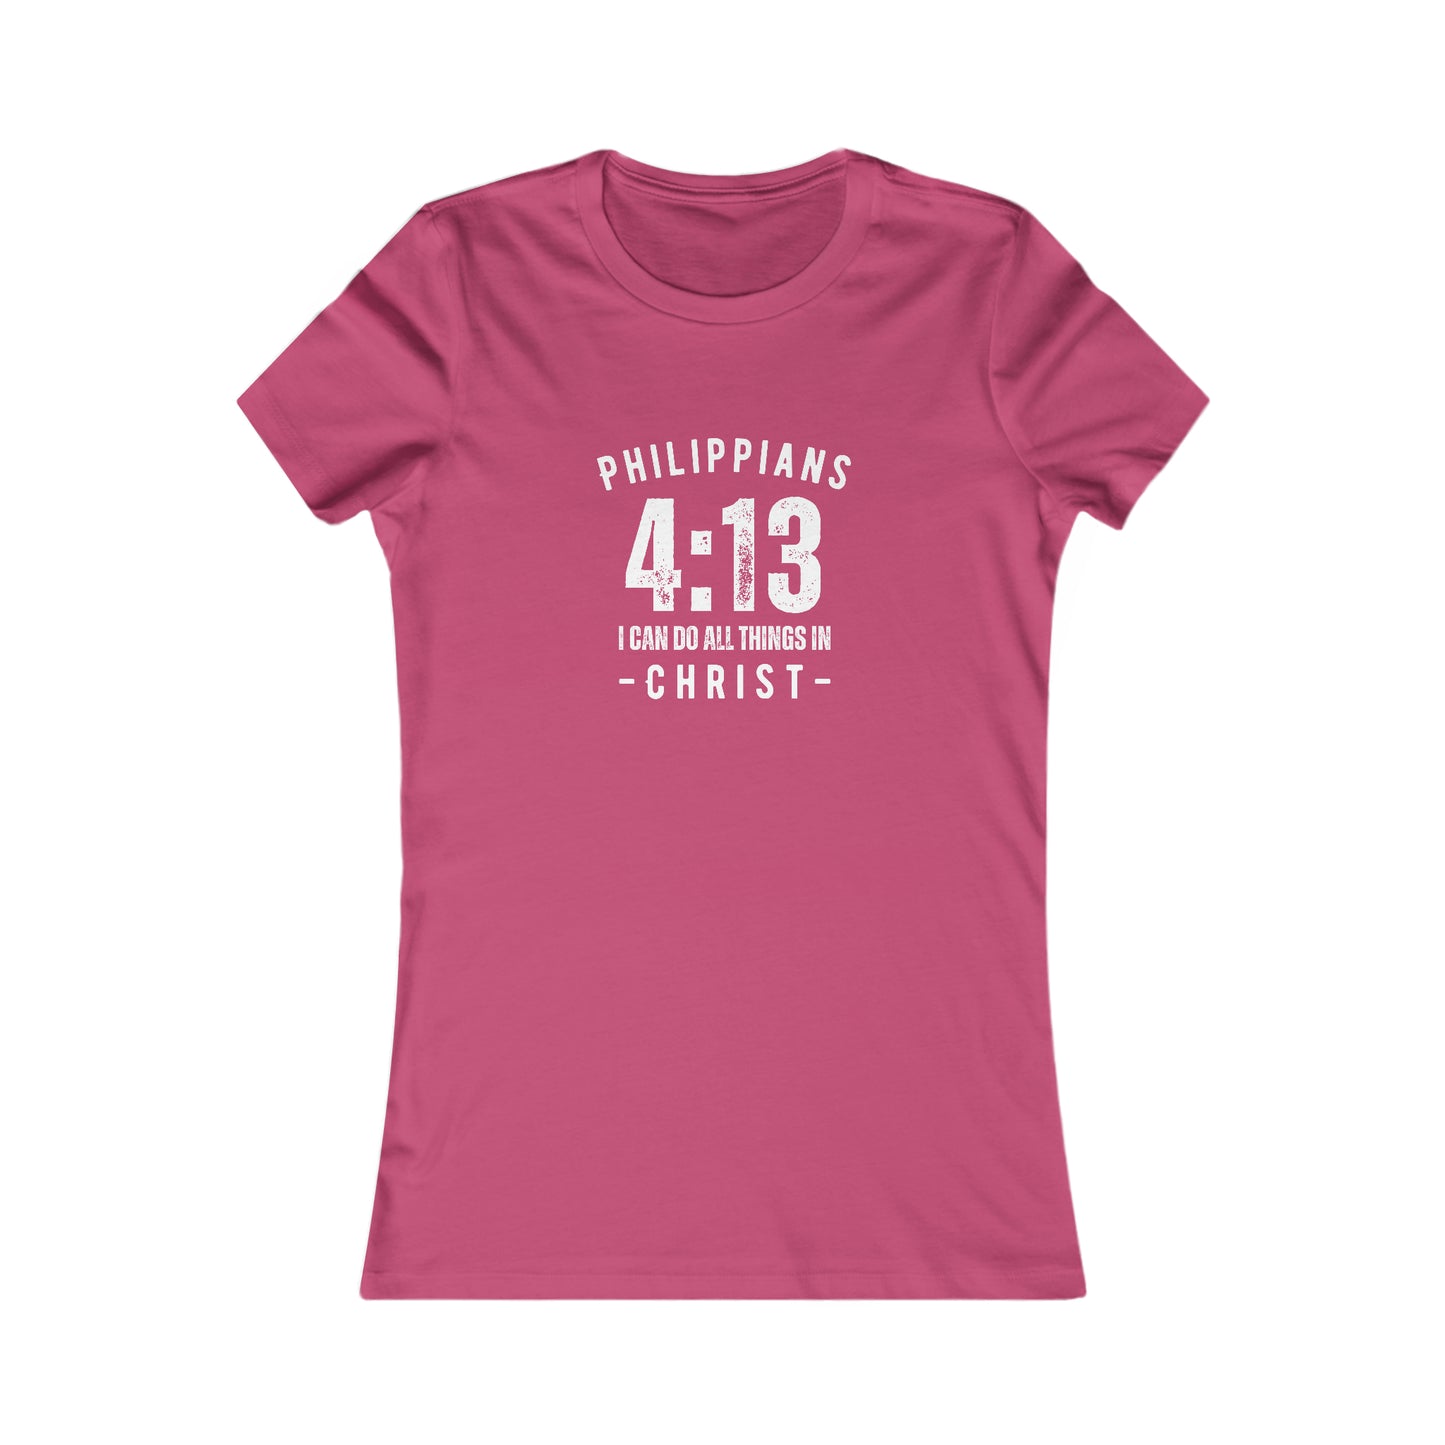 Philippians 4:13, Christian T-shirt for Women